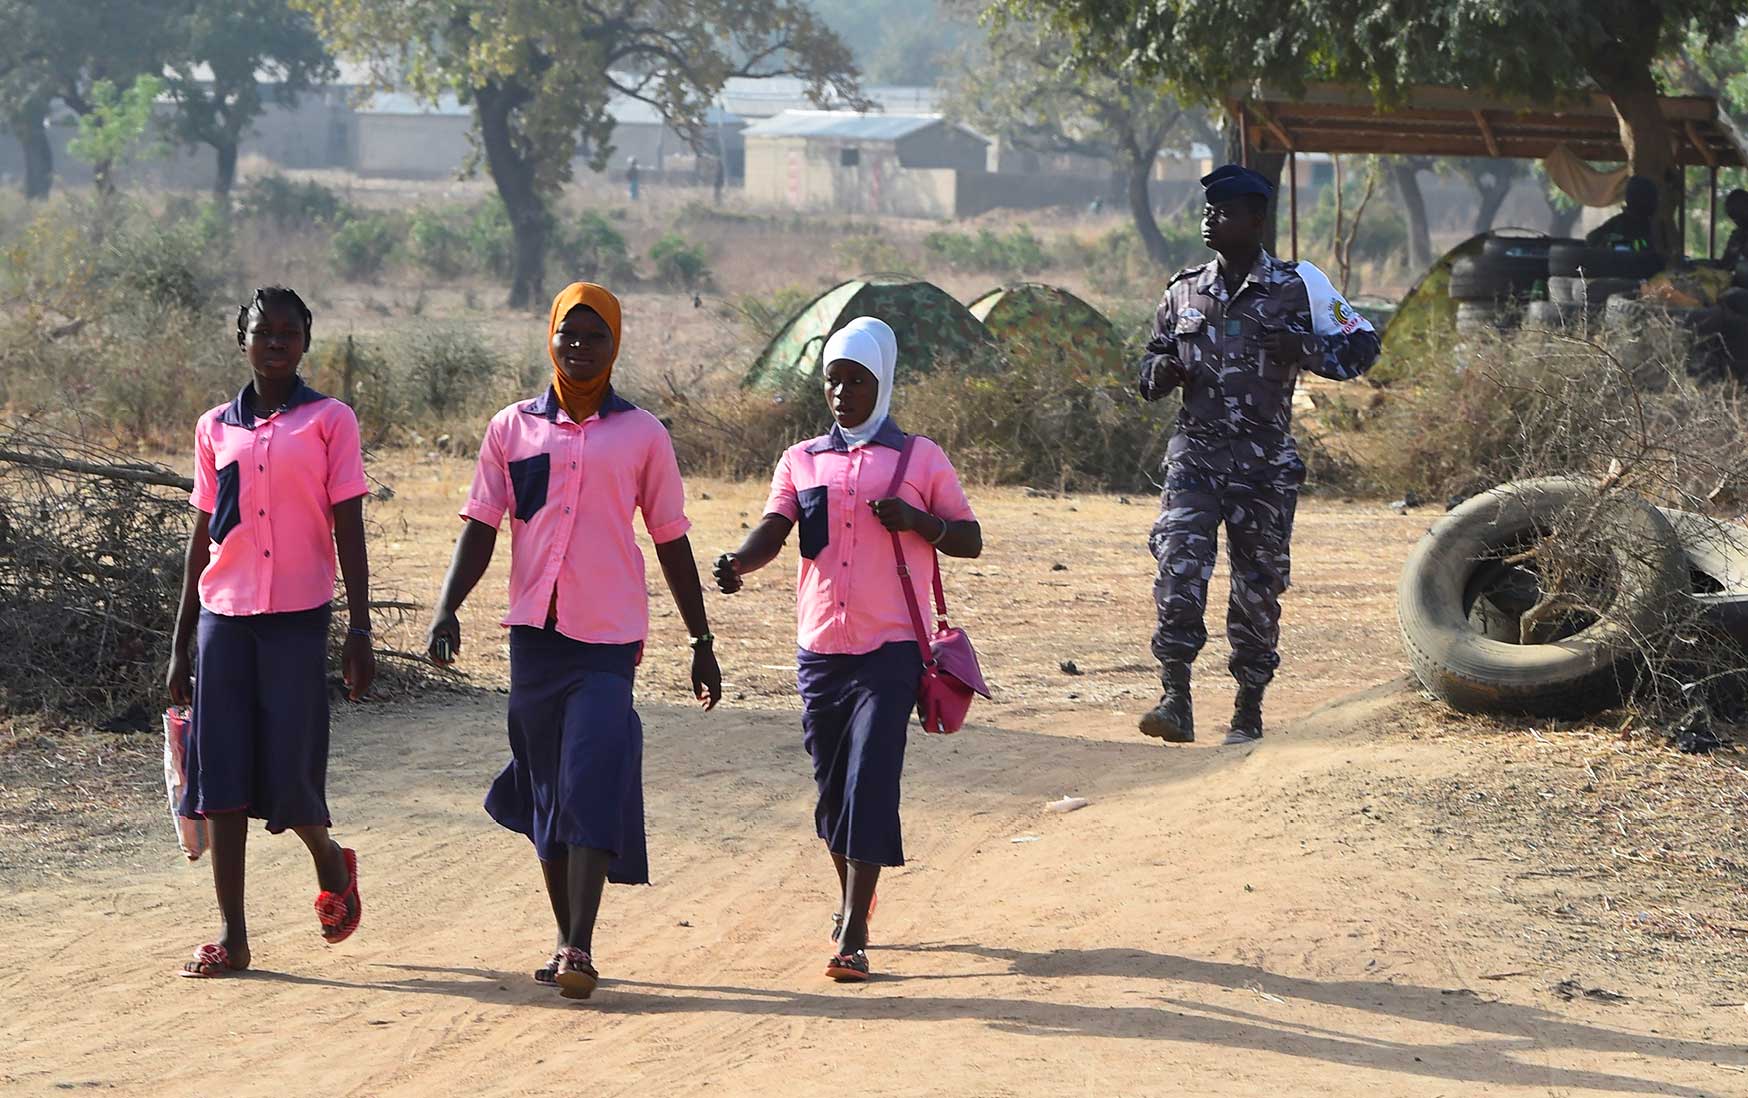 A policeman walks behind school girls